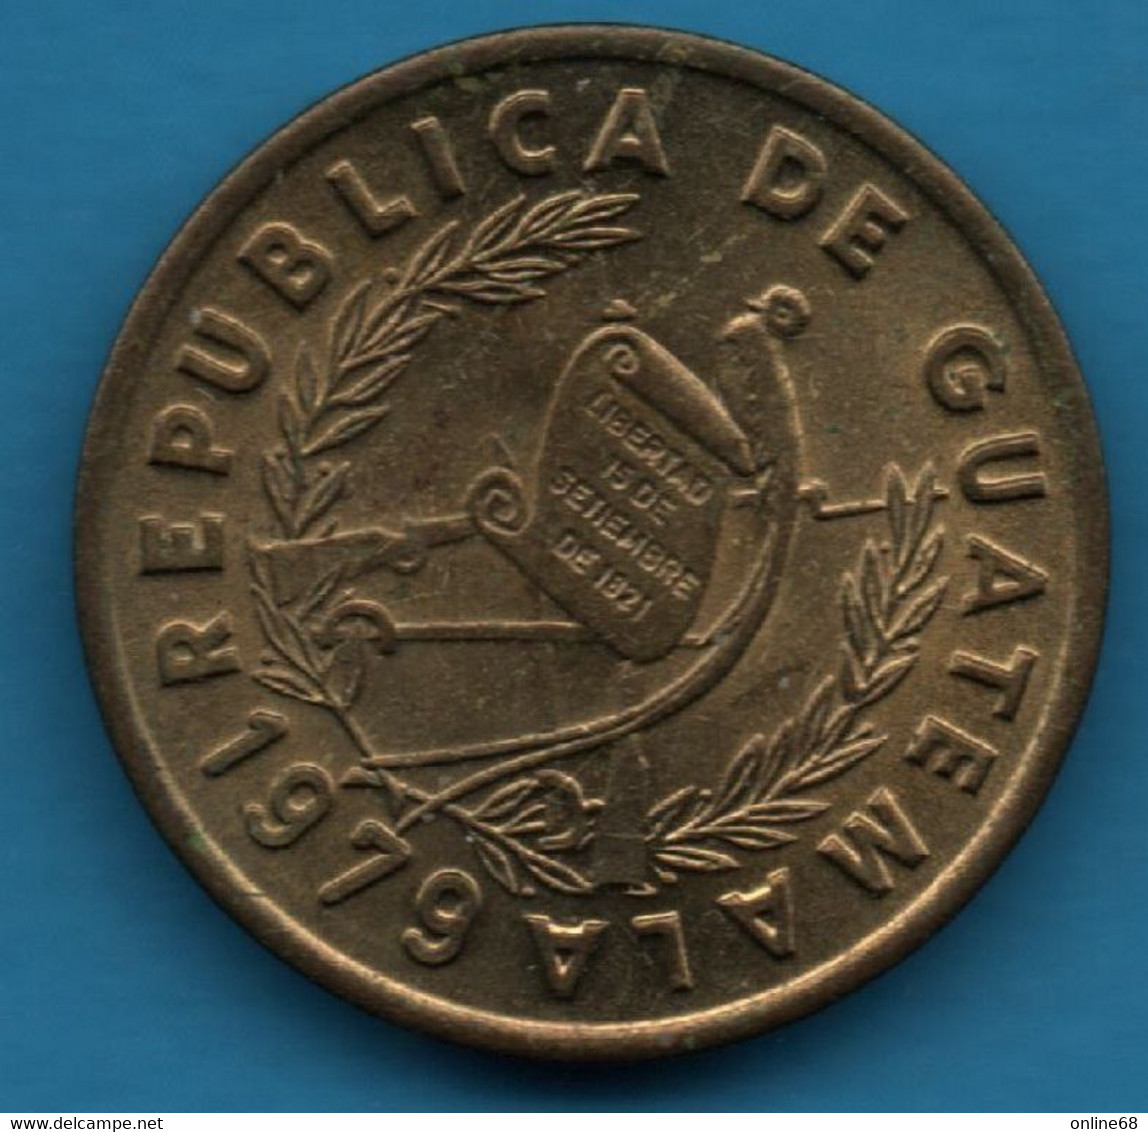 GUATEMALA 1 CENTAVO 1979 KM# 275 FRAY BARTOLOME DE LAS CASAS - Guatemala